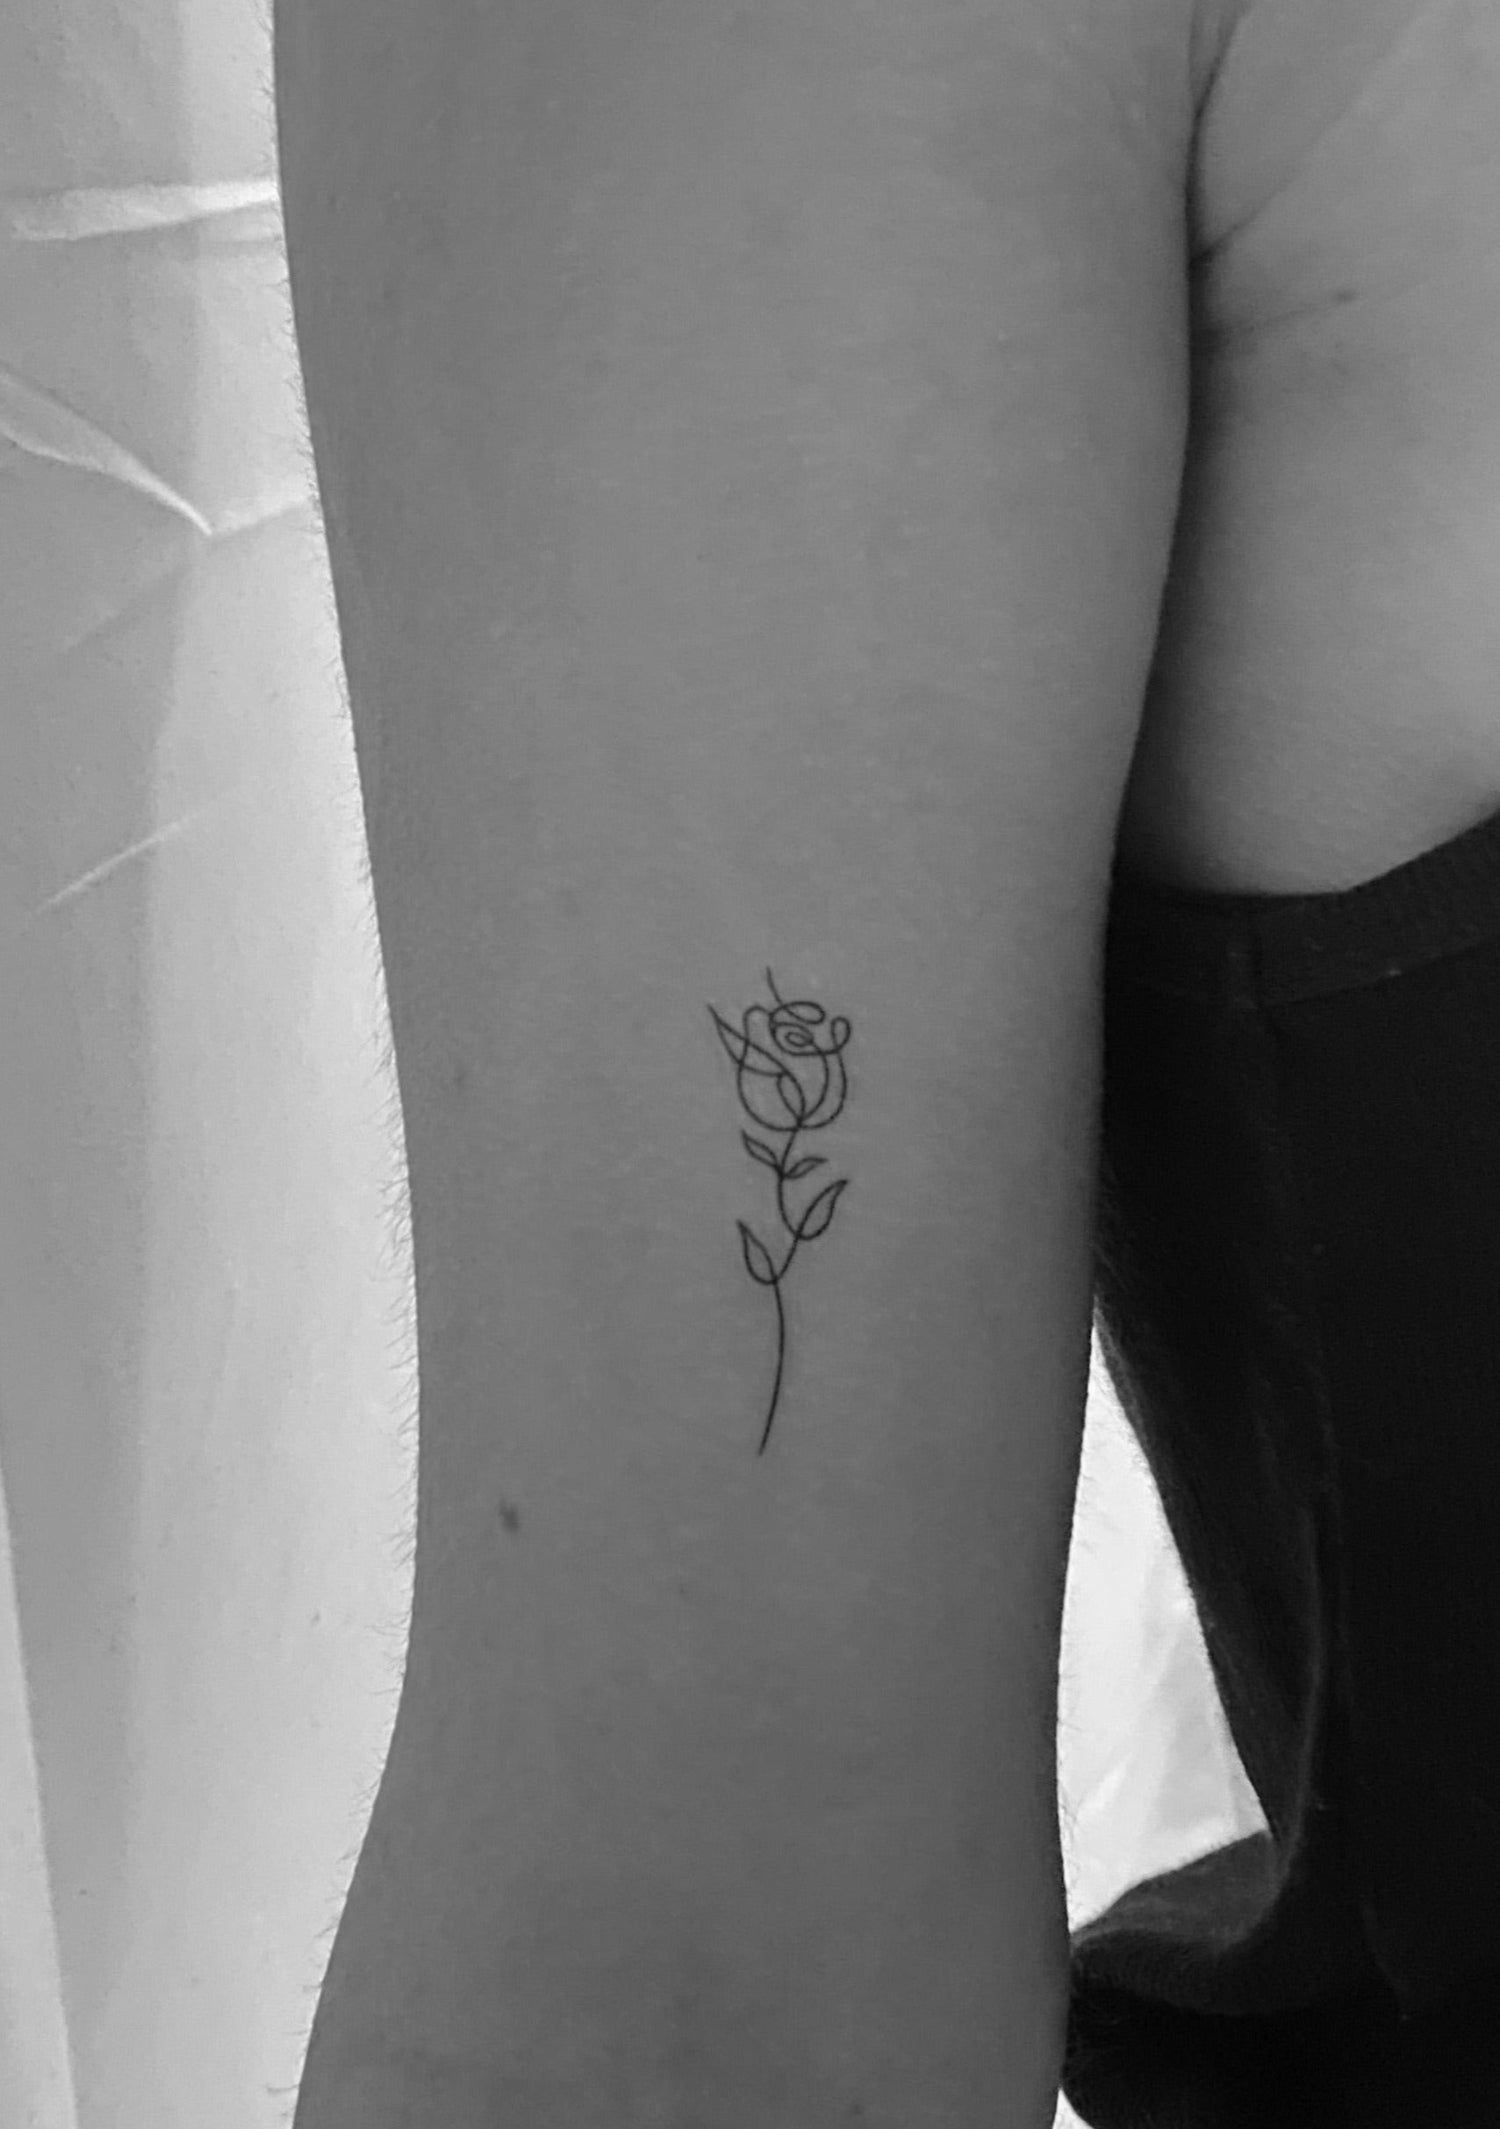 Novytattoo Handmade on X Line Rose  rosetattoo flower line  tattooedgirl finelinetattoo fineline rosa rosebud rose roseline  tattoo onmyskin indelible inkedgirl handmadetattoostudio carpi ink  art  httpstcoCH7cC2vMBC  X